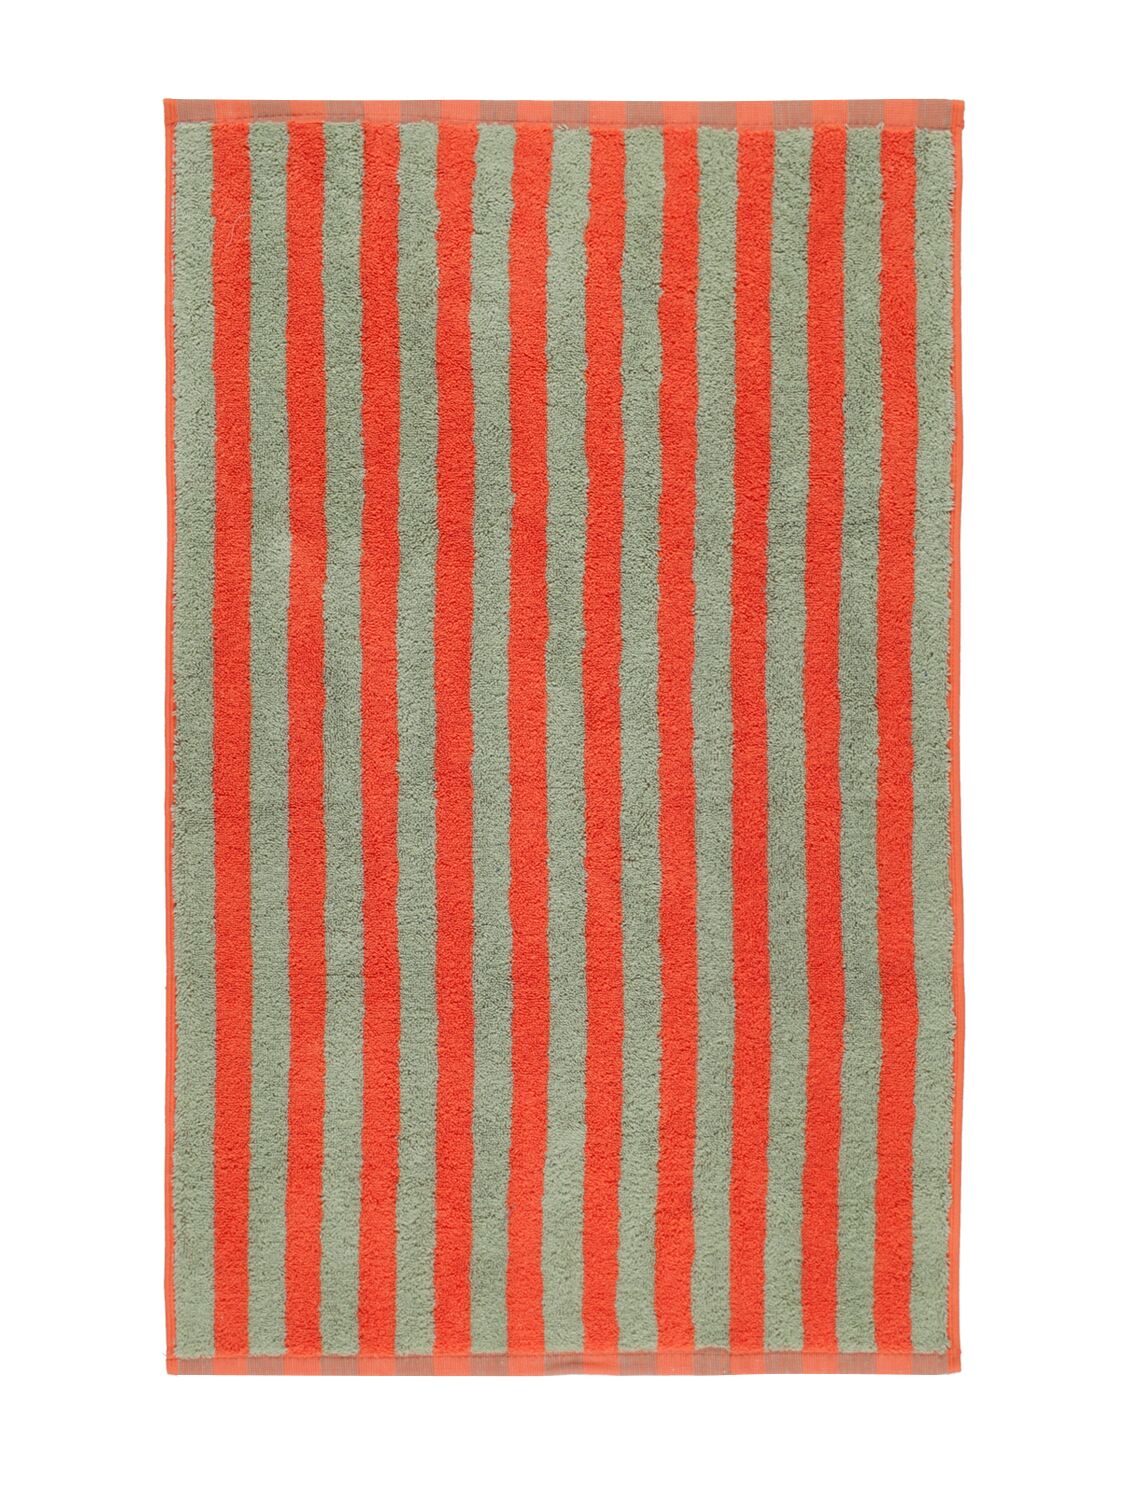 Image of Sunset Stripe Cotton Hand Towel